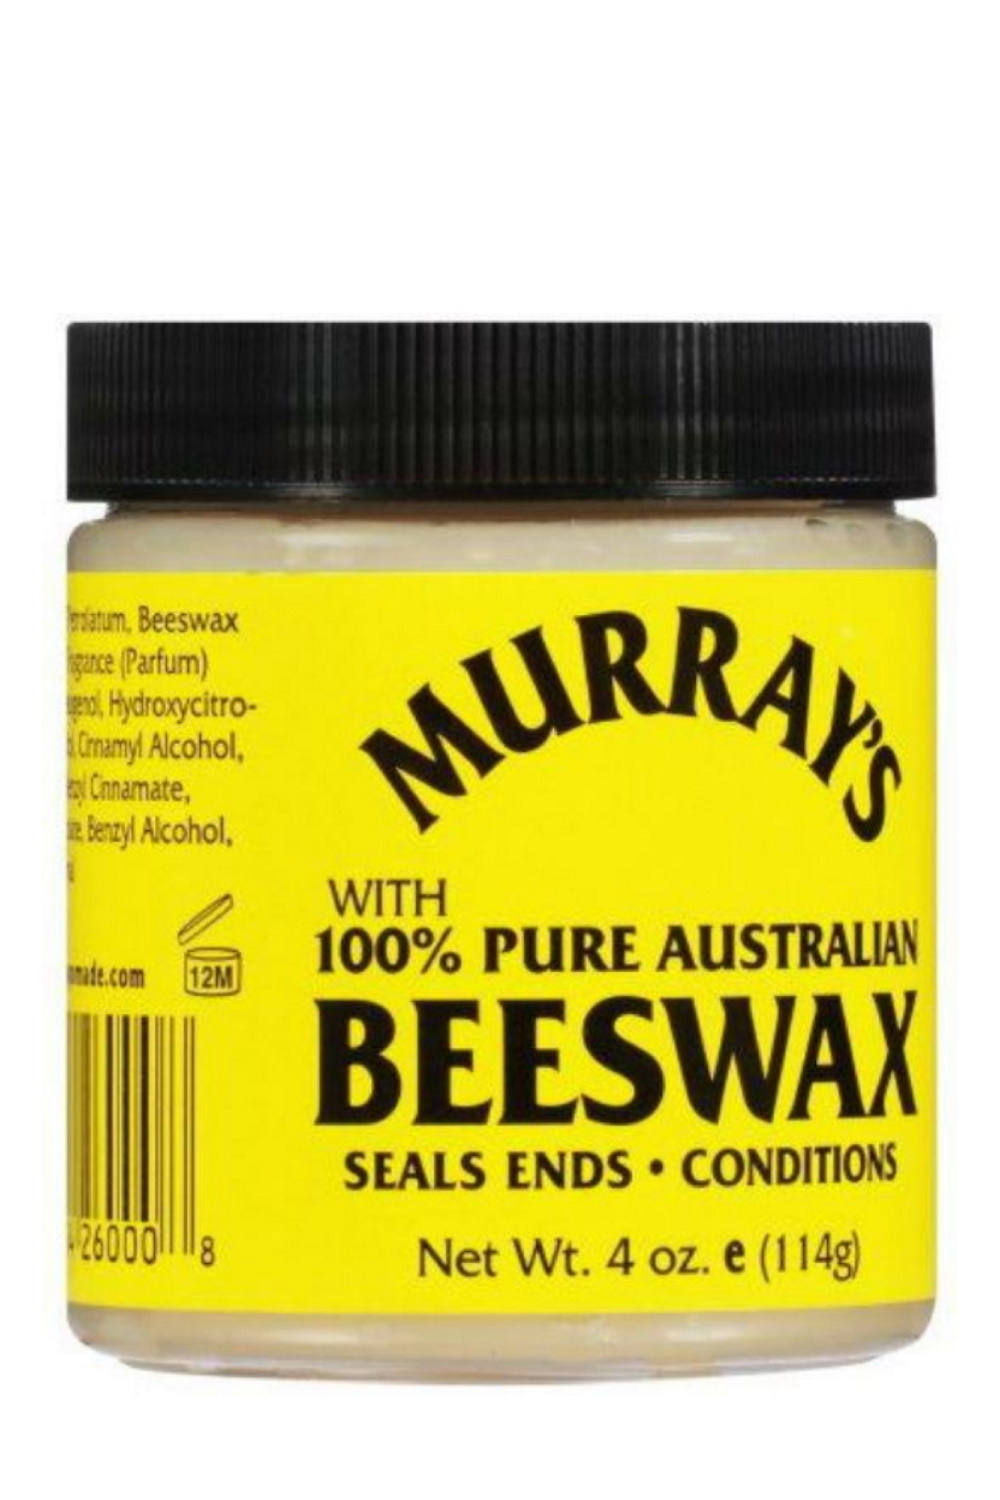 Murray's Black Beeswax with 100% Pure Australian Beeswax 4 oz.